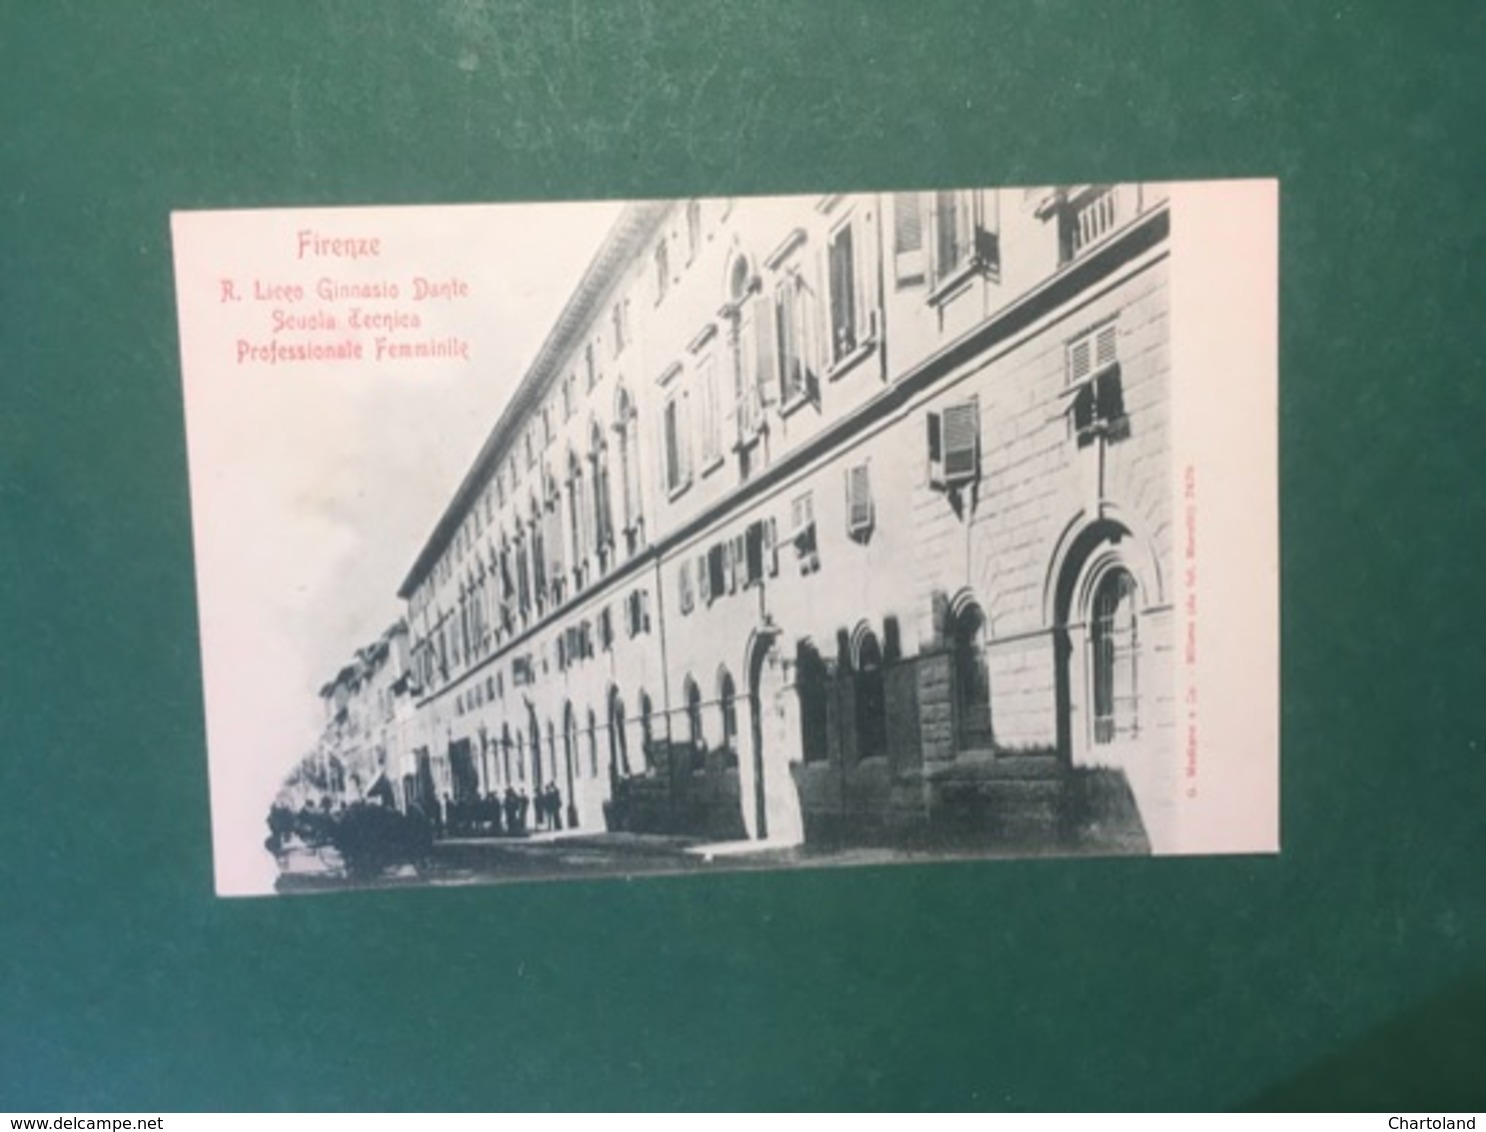 Cartolina Firenze - R. Liceo Ginnasio Dante - Scuola Tecnica - 1920 Ca. - Firenze